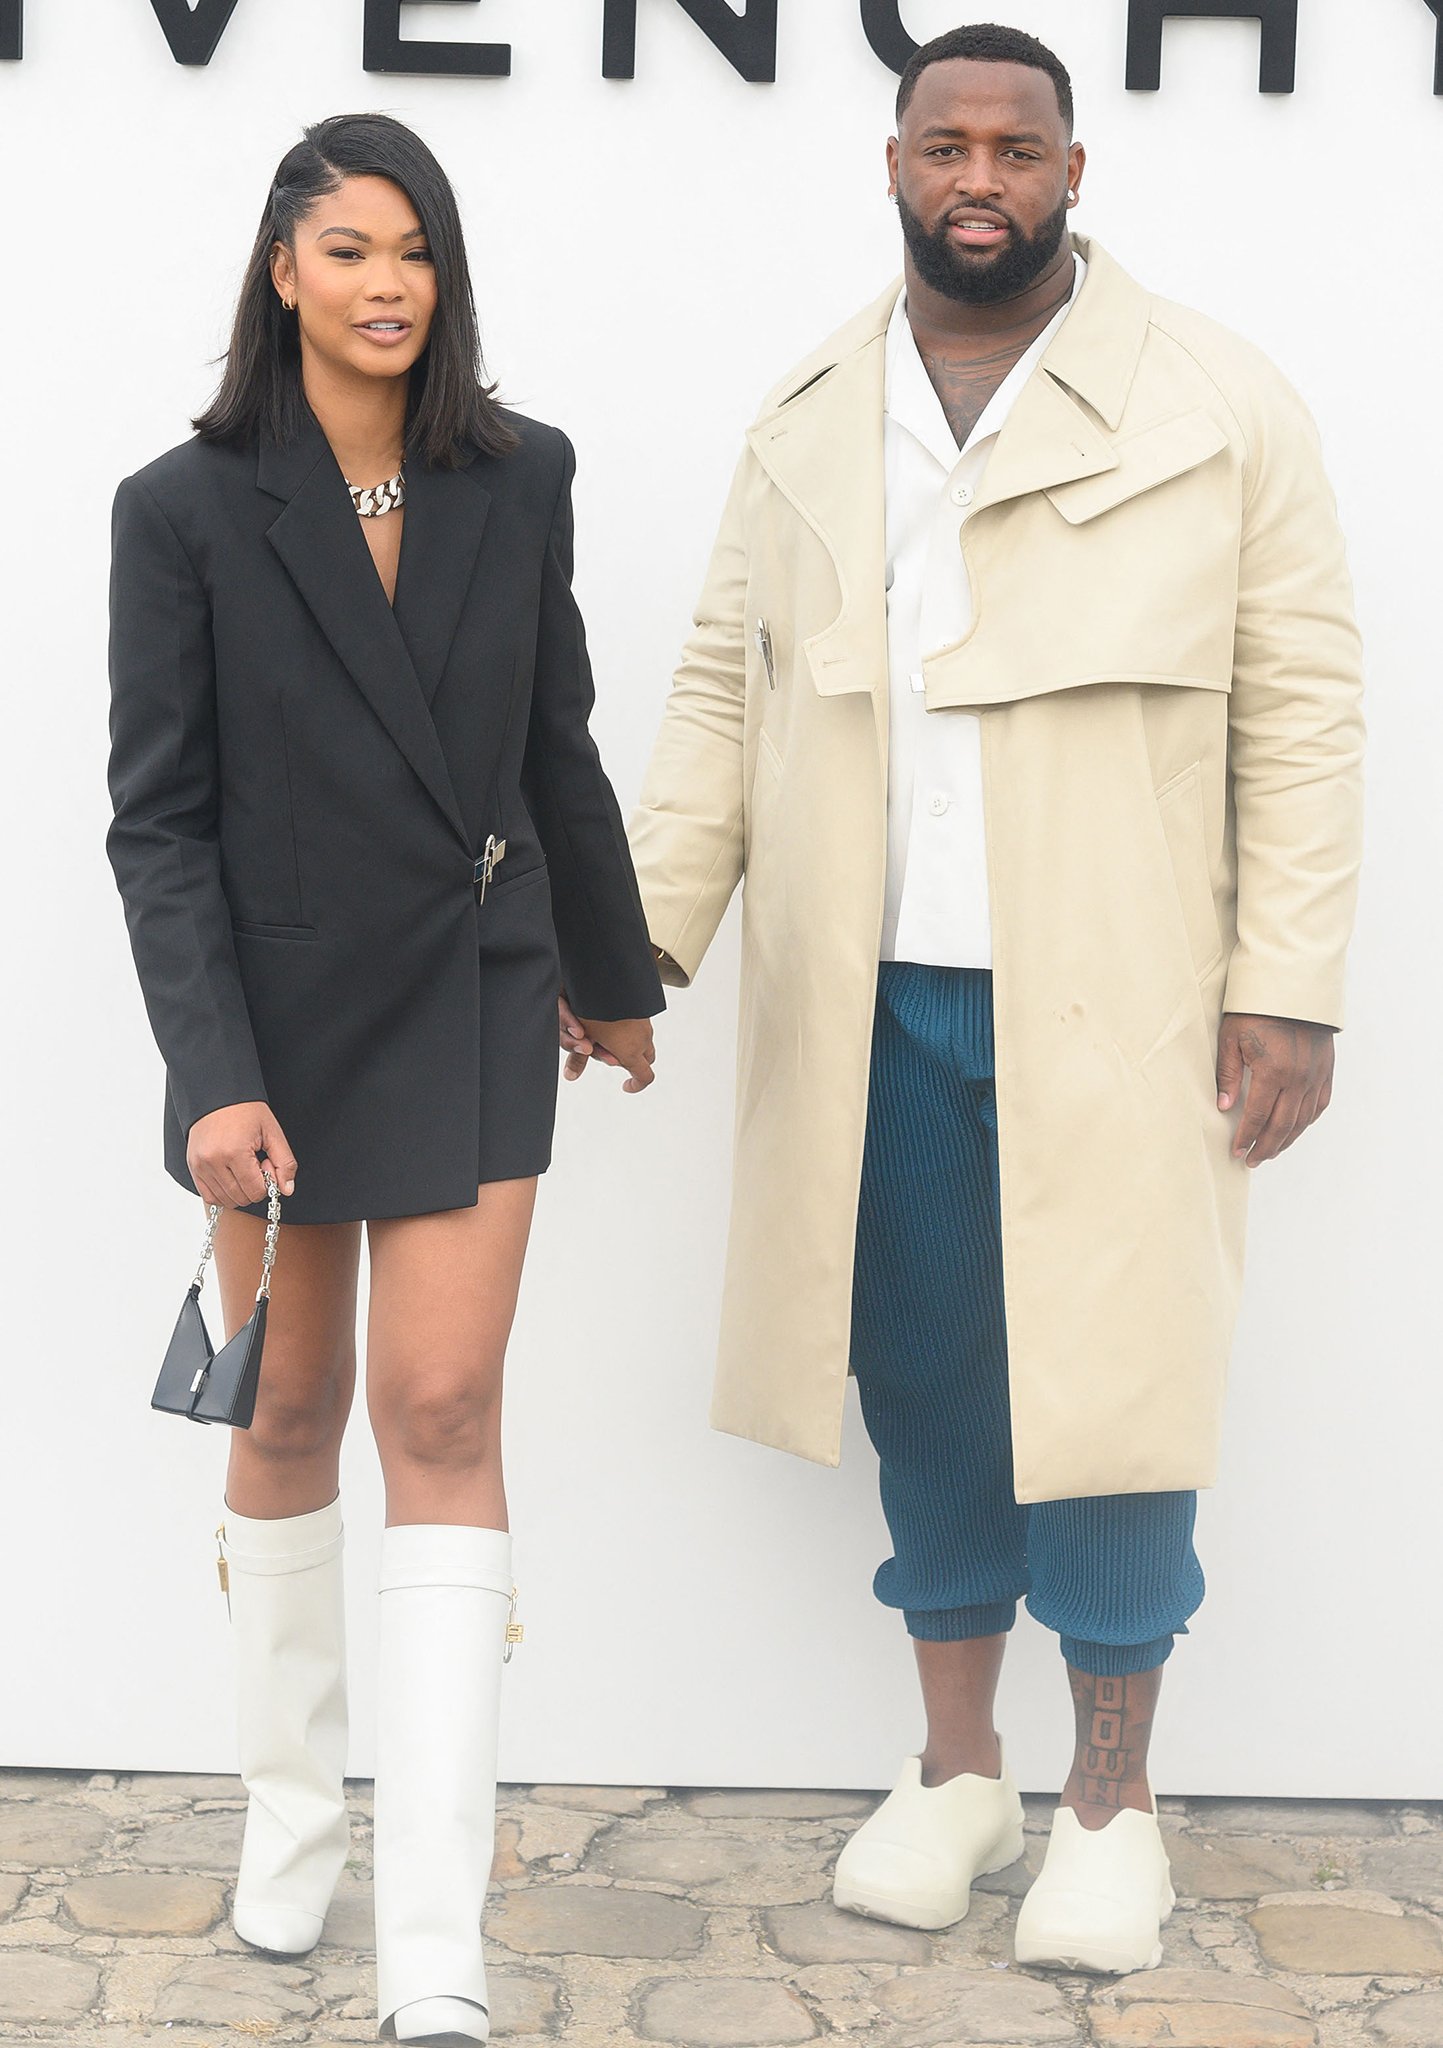 Chanel Iman & New Boyfriend Davon Godchaux @ Givenchy Menswear PFW Show